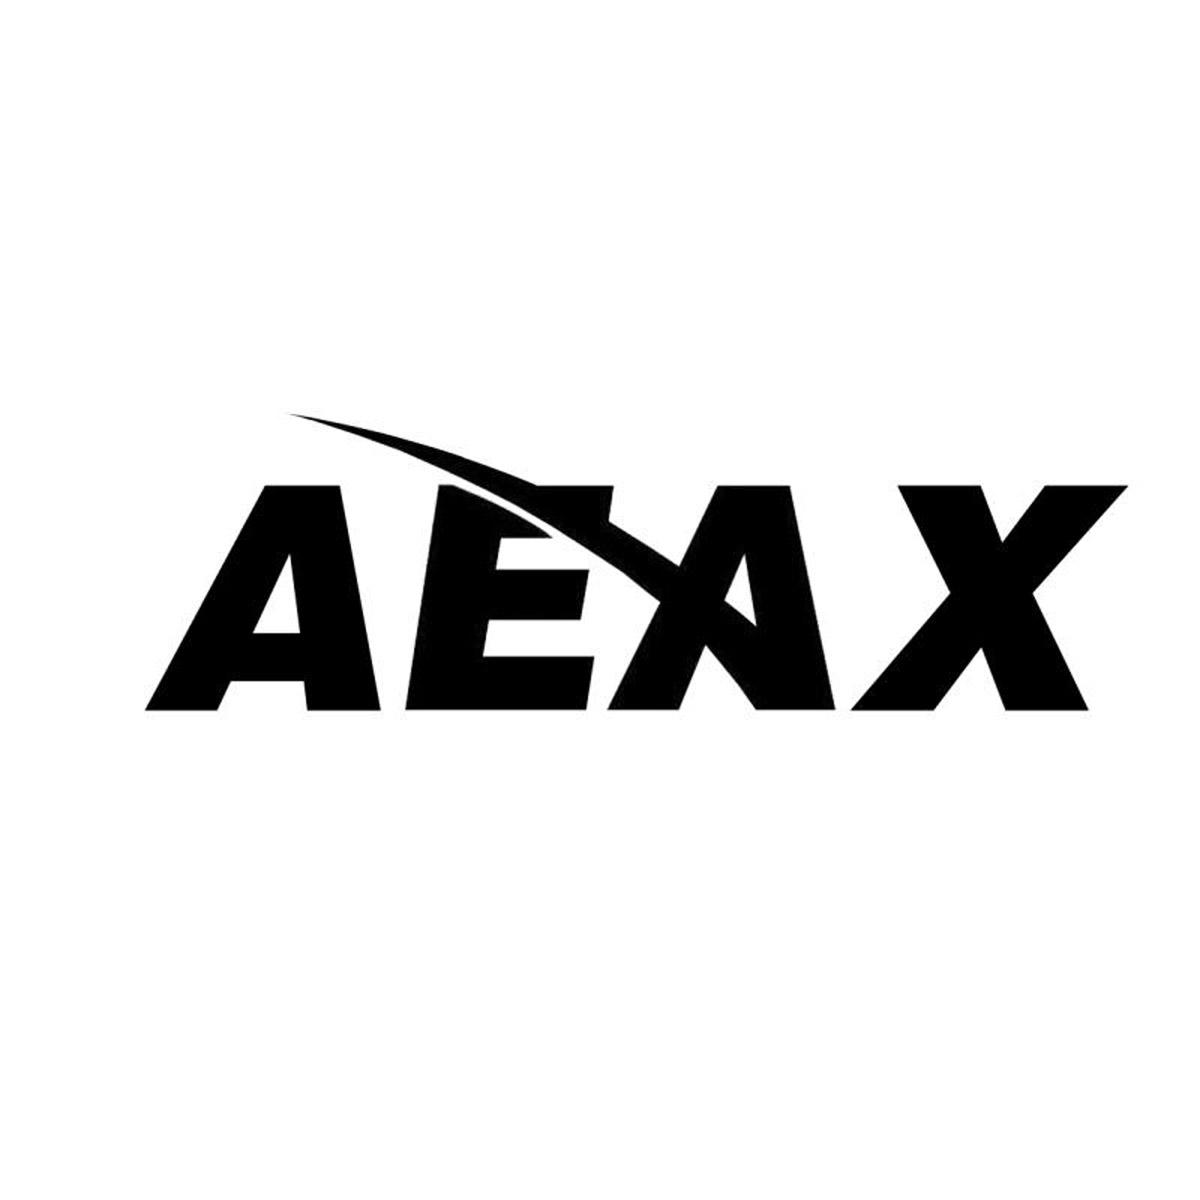 AEAX安全头盔商标转让费用买卖交易流程